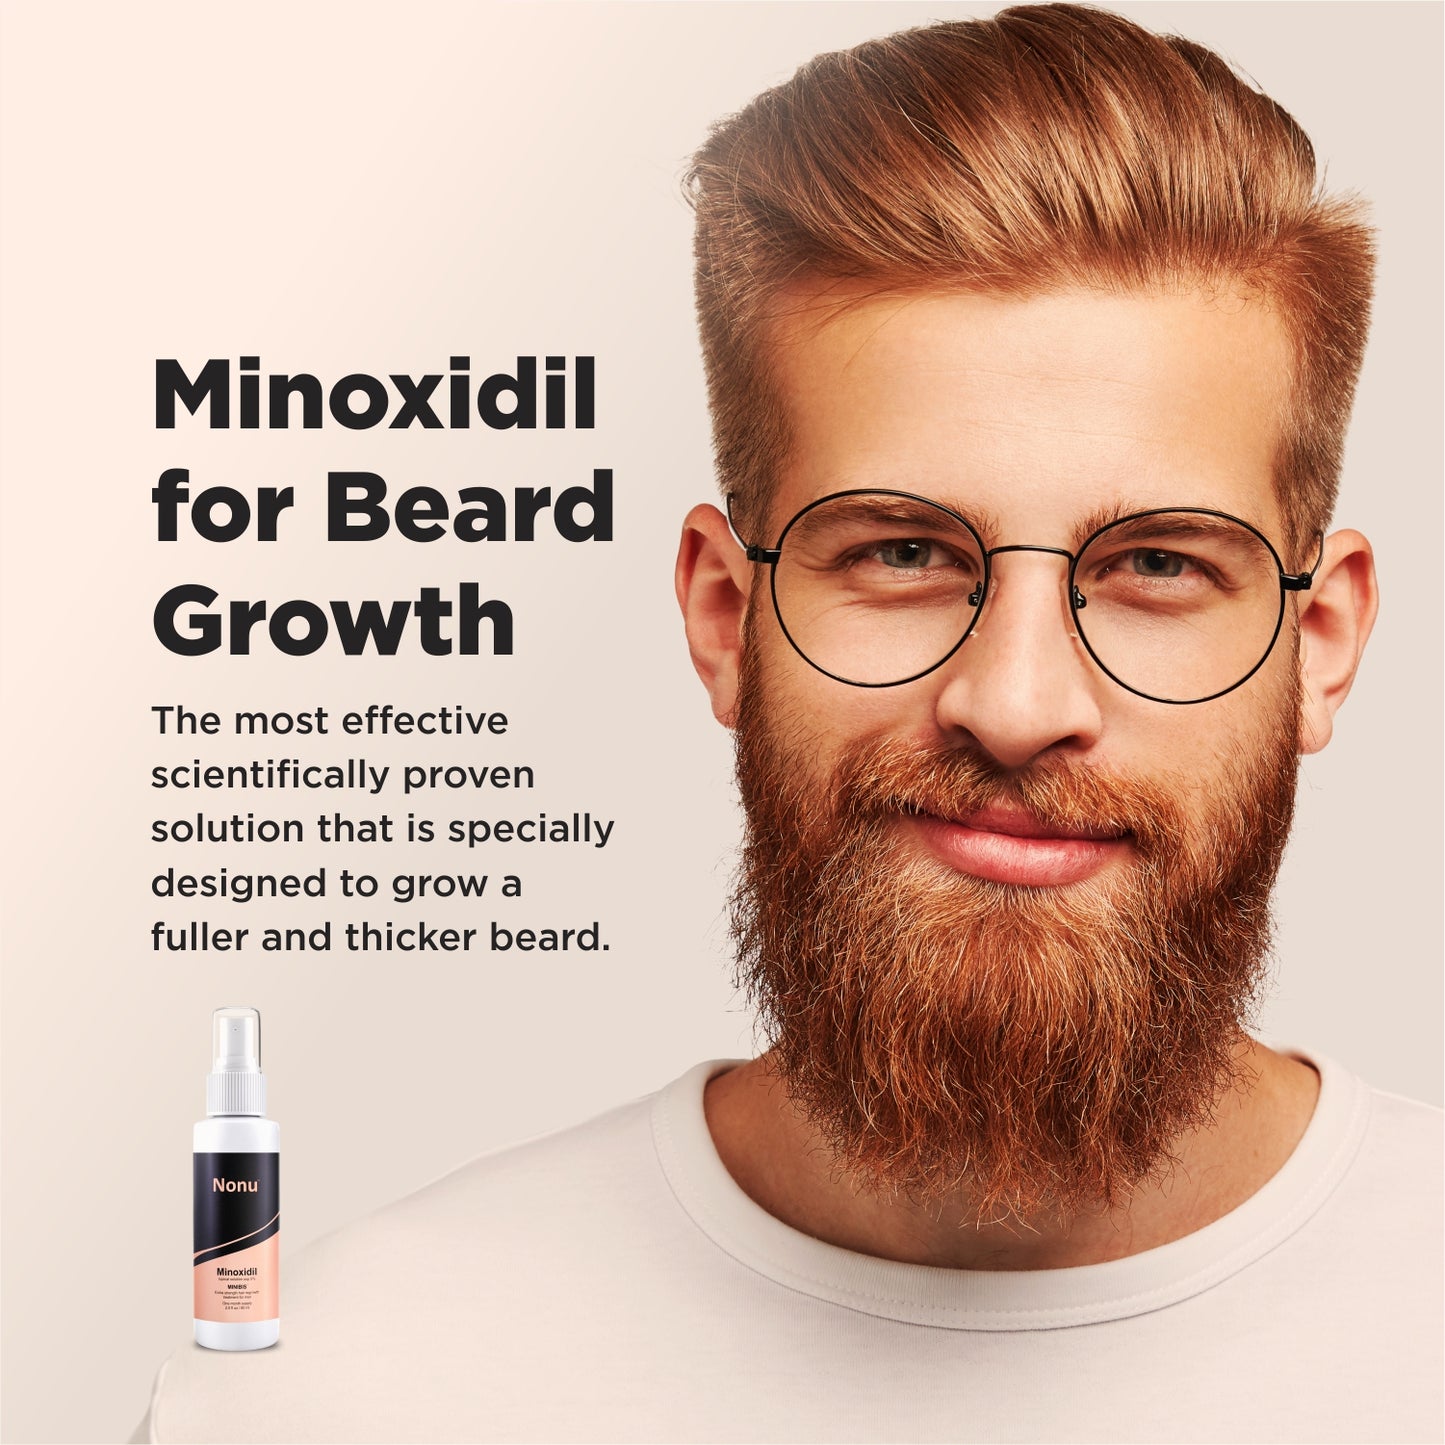 Minoxidil for Beard Growth